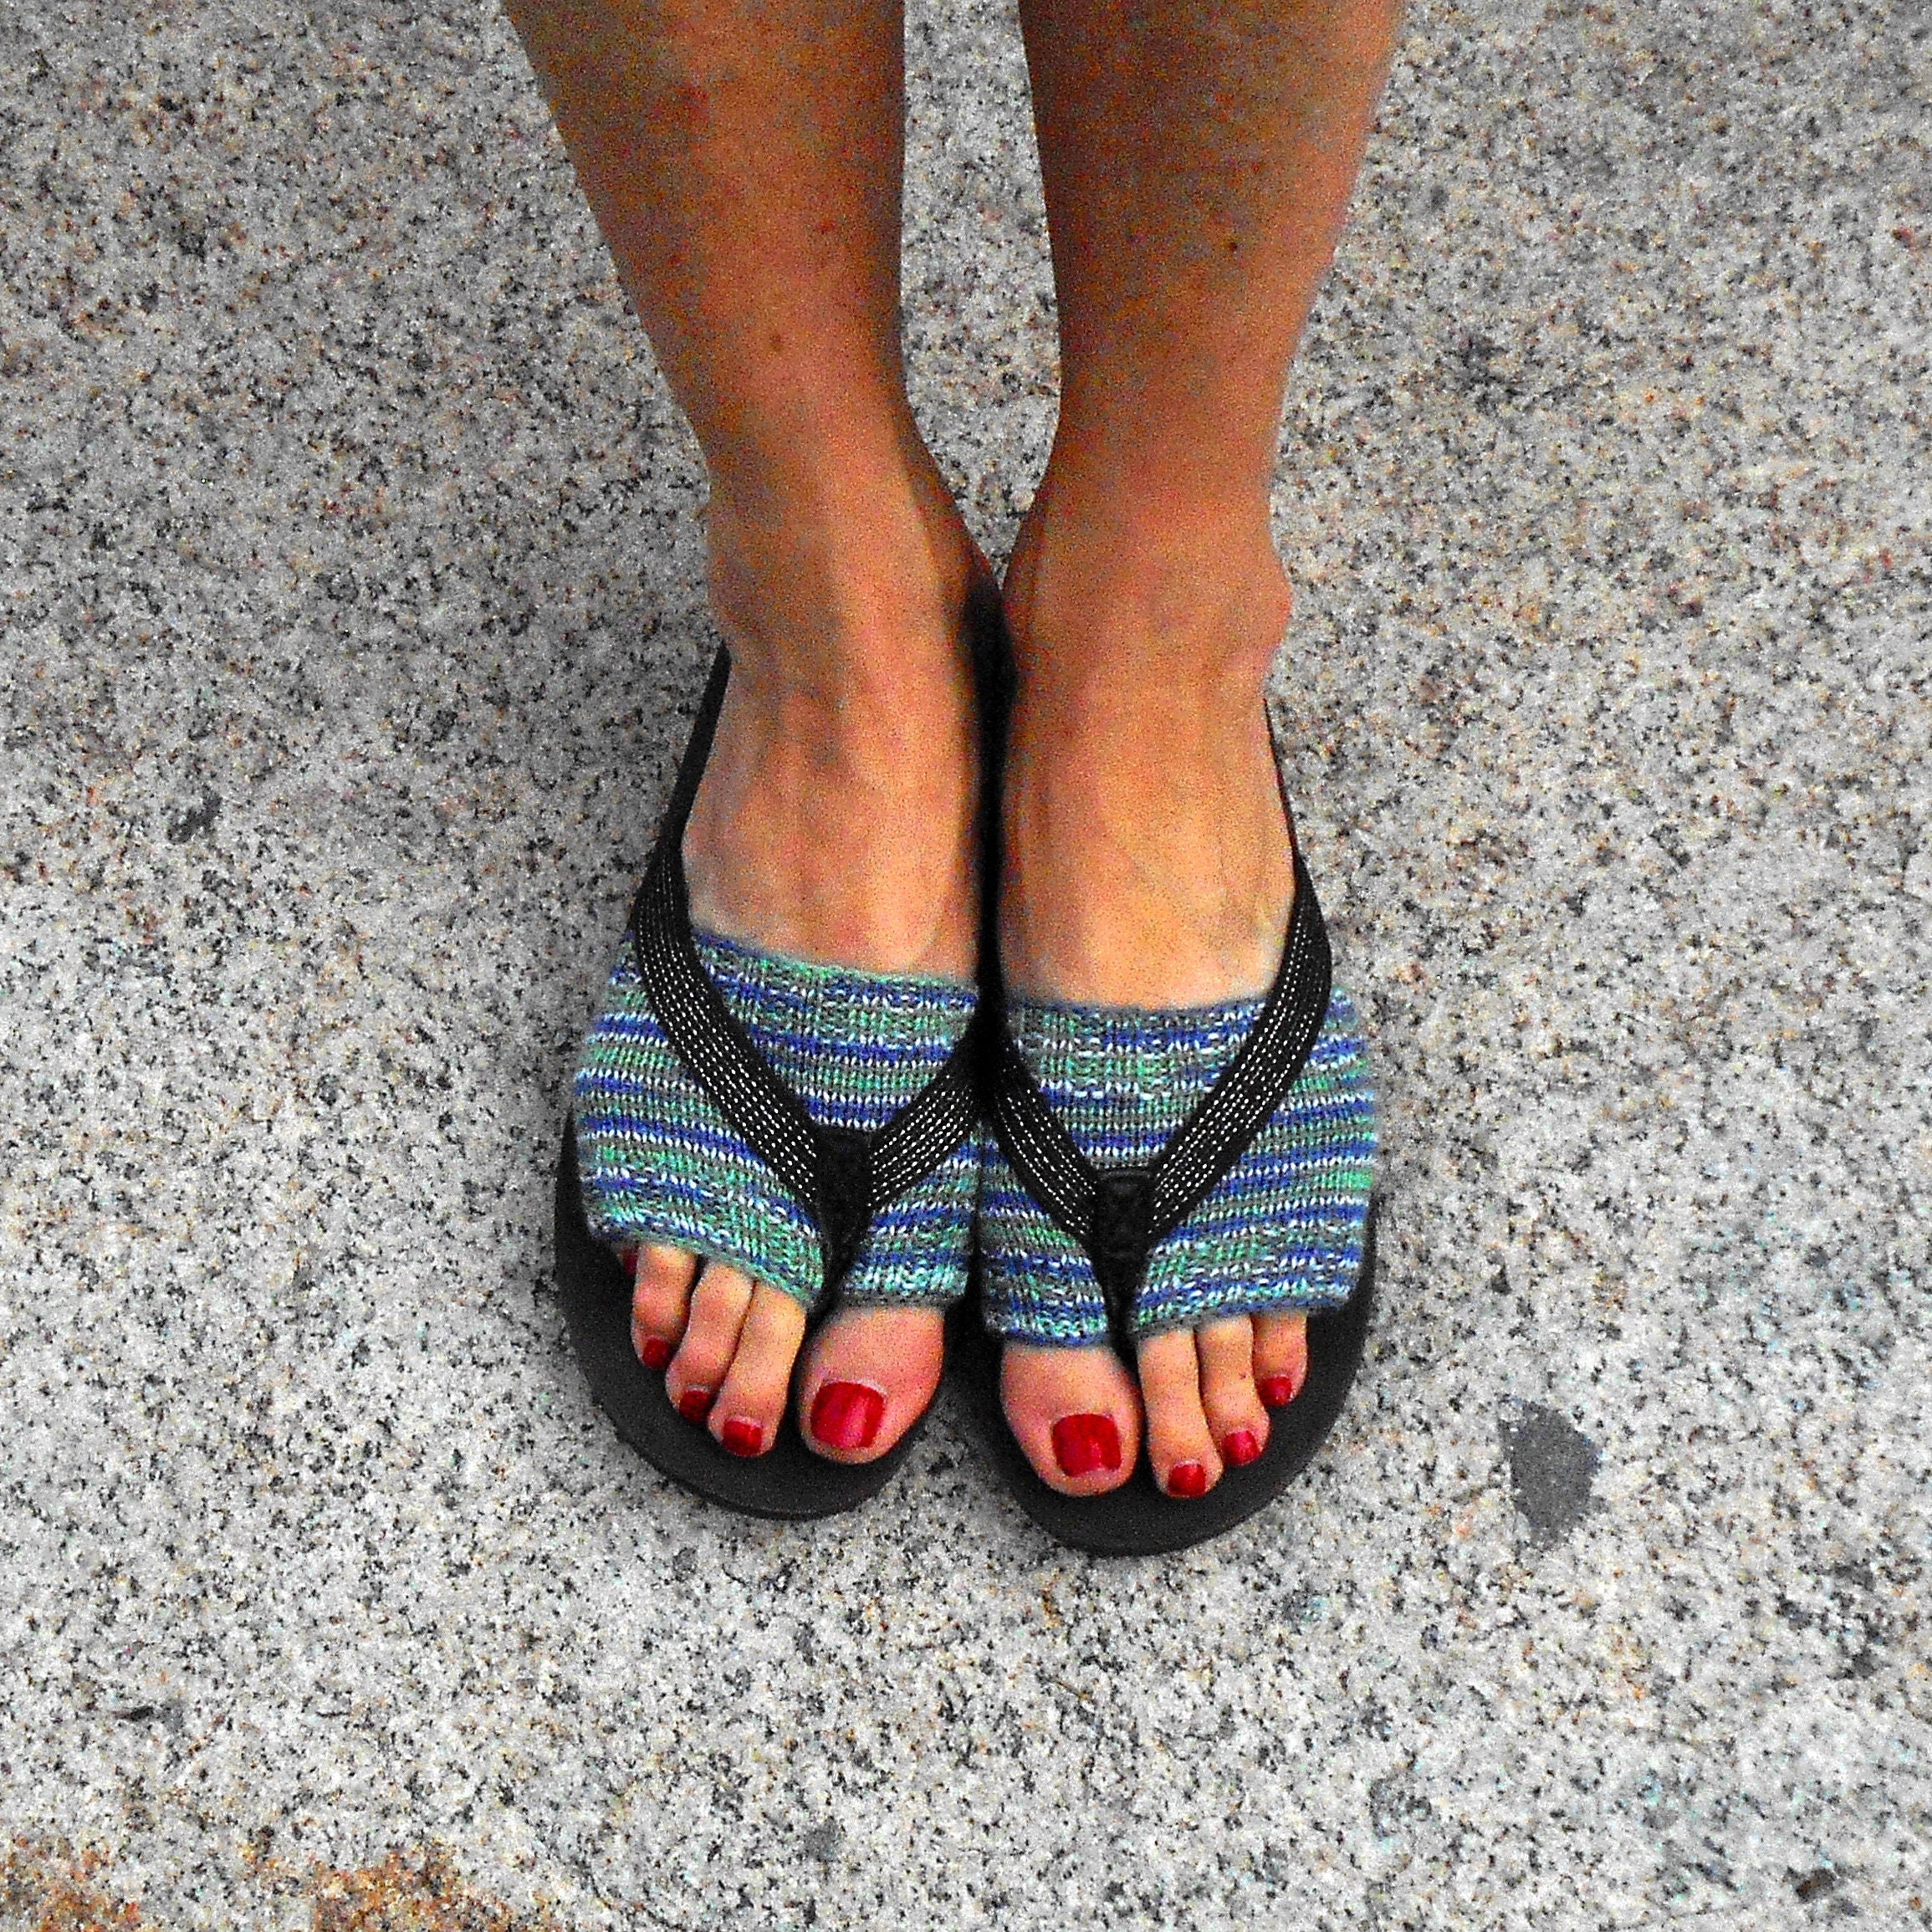 Flip Flops Sandal,leather Sandals Women,yoga Sandals,leather